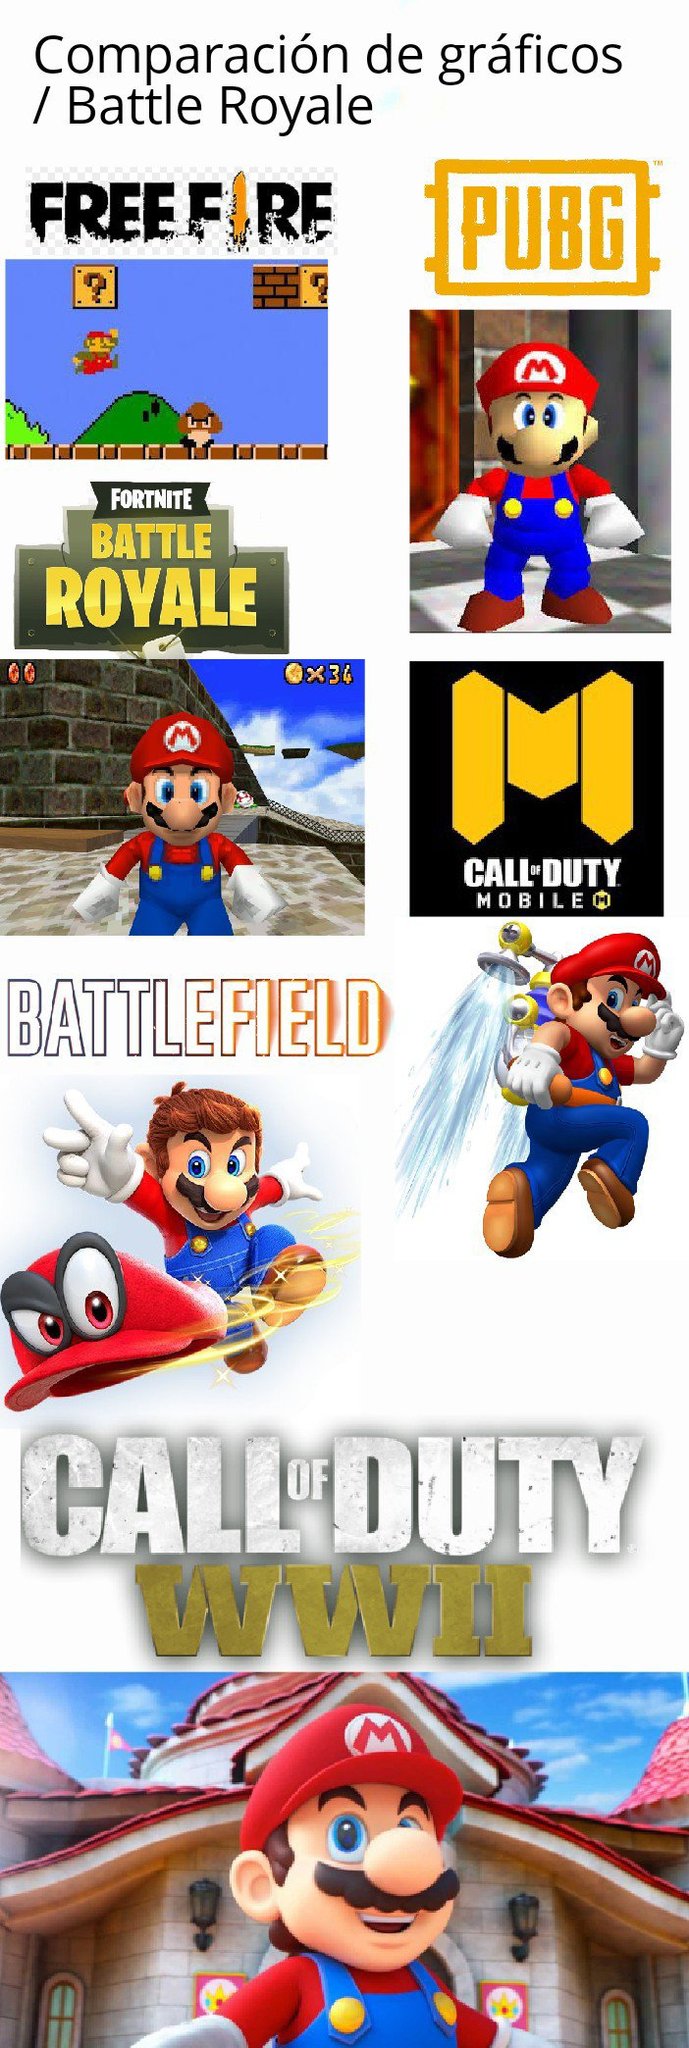 Comparación de gráficos de Battle Royale - meme